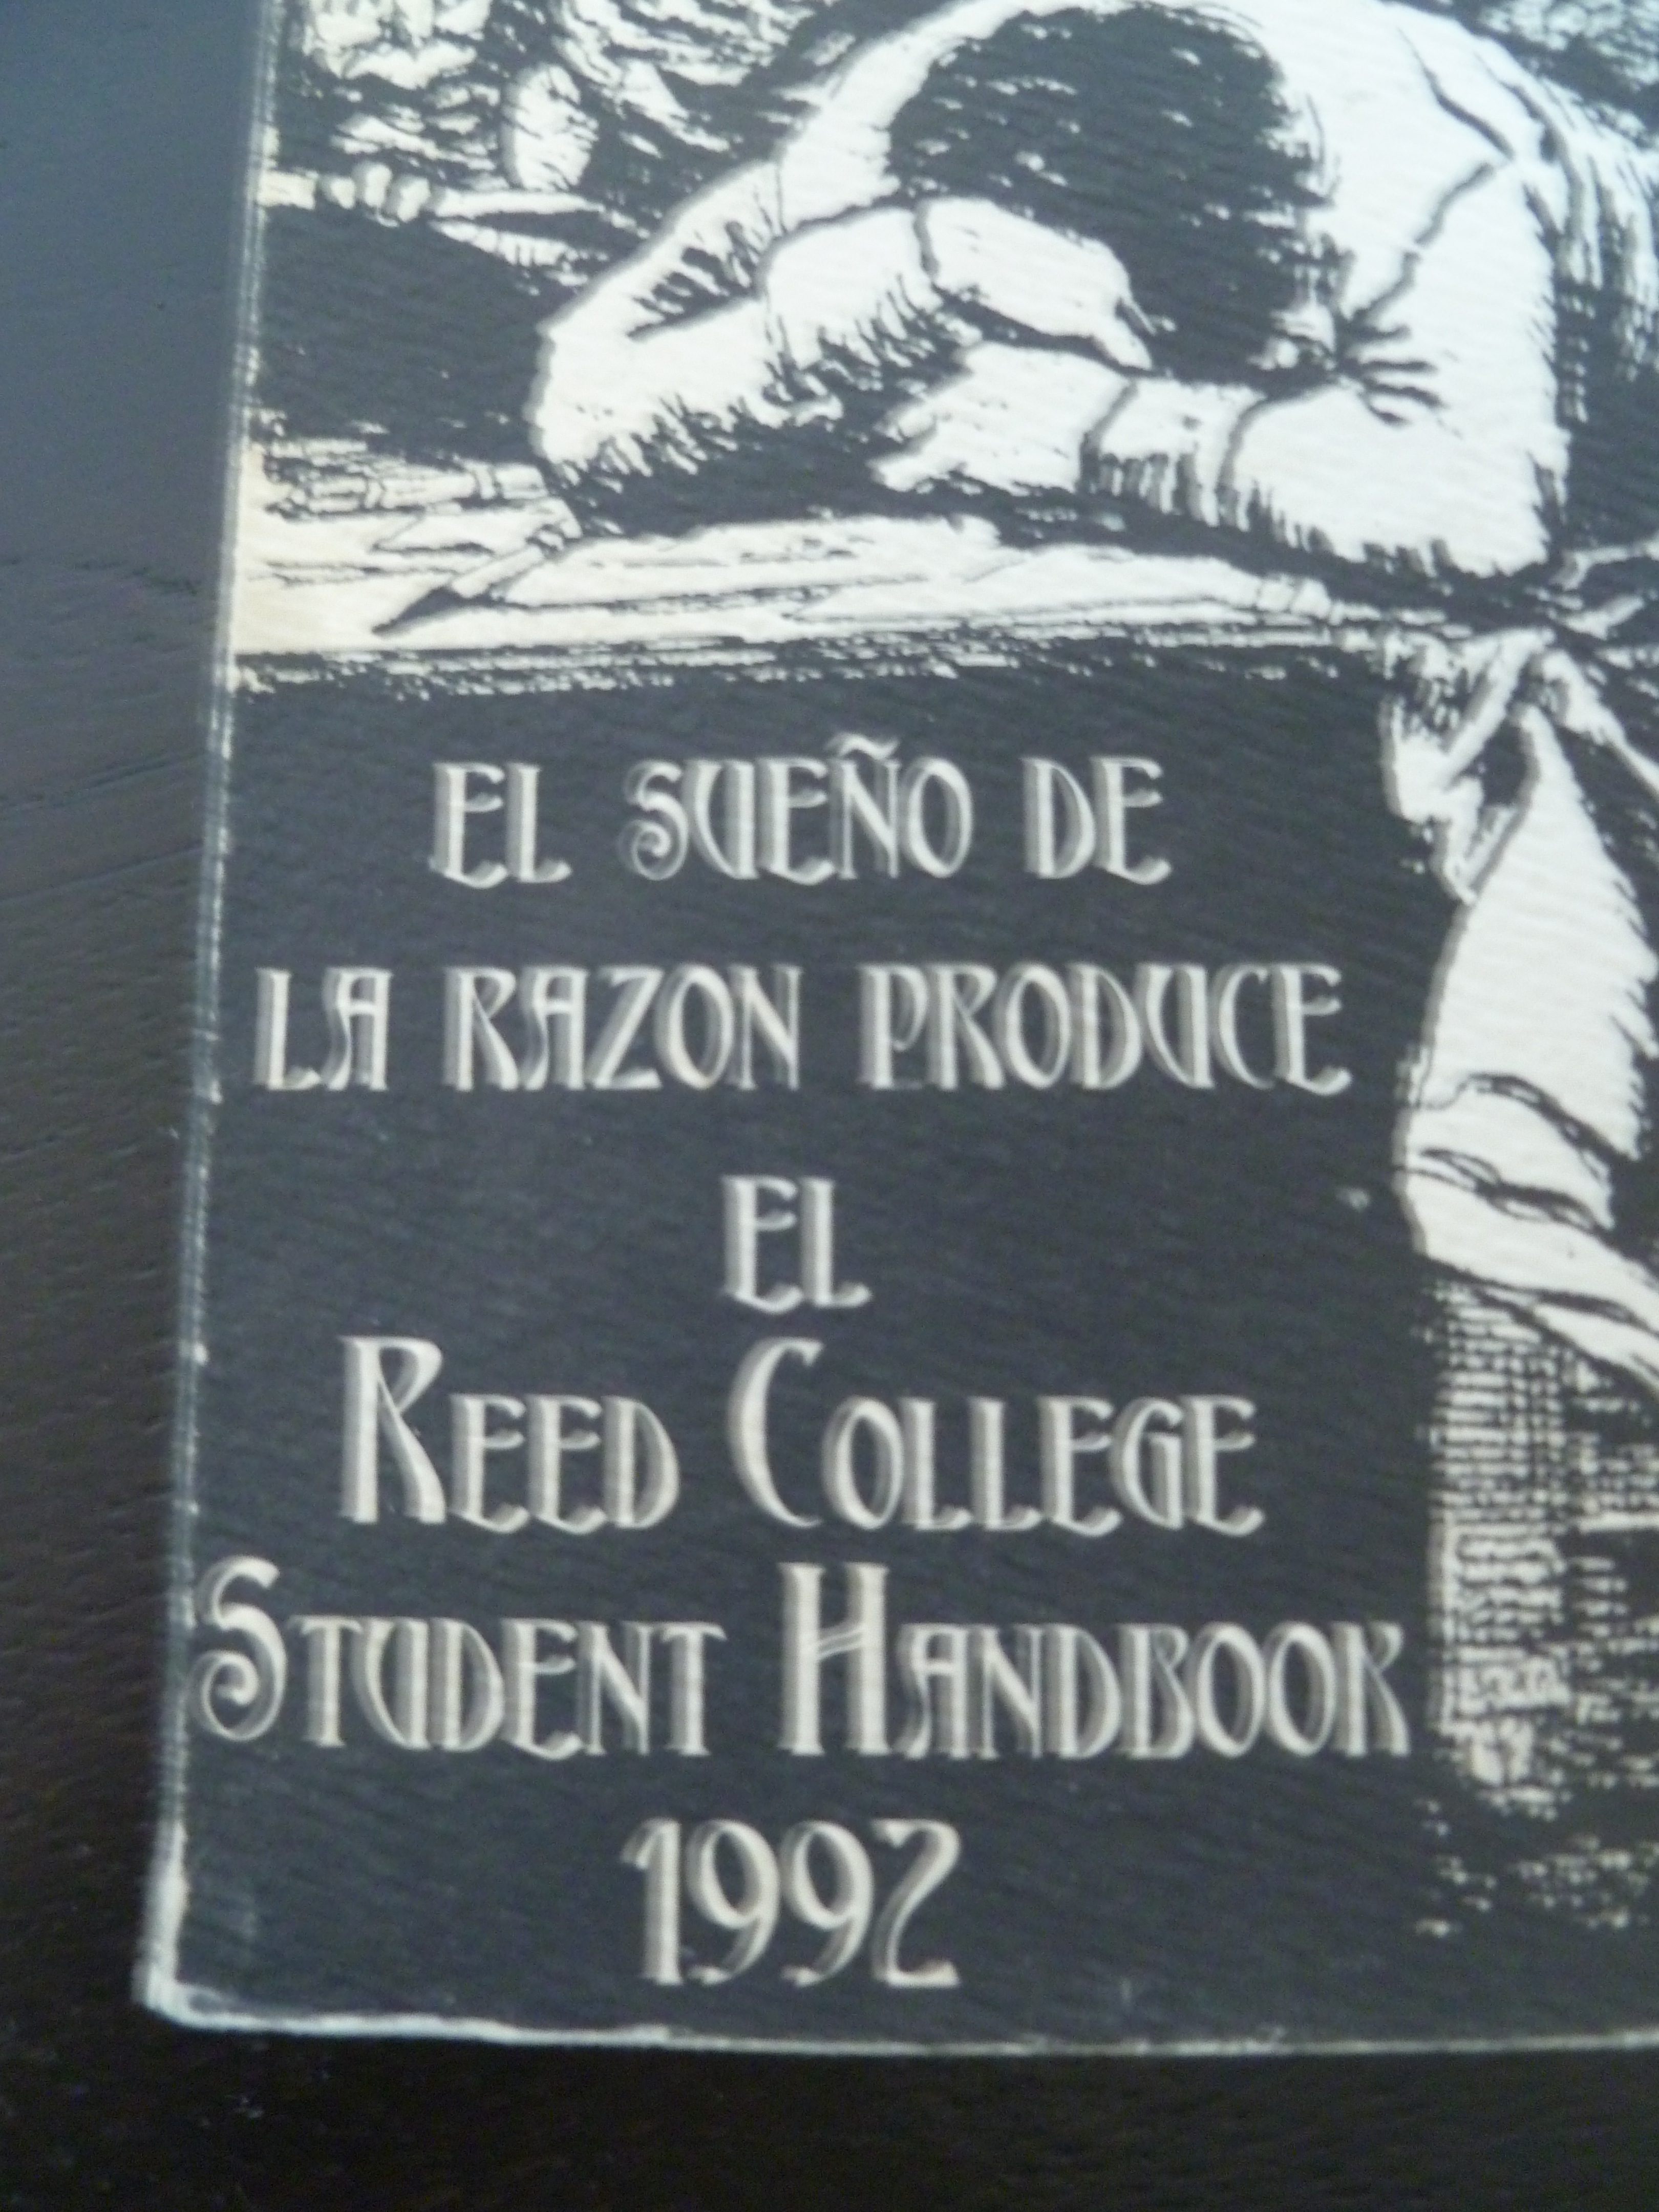 1992 Reed Student Handbook at Commerce Kitchen